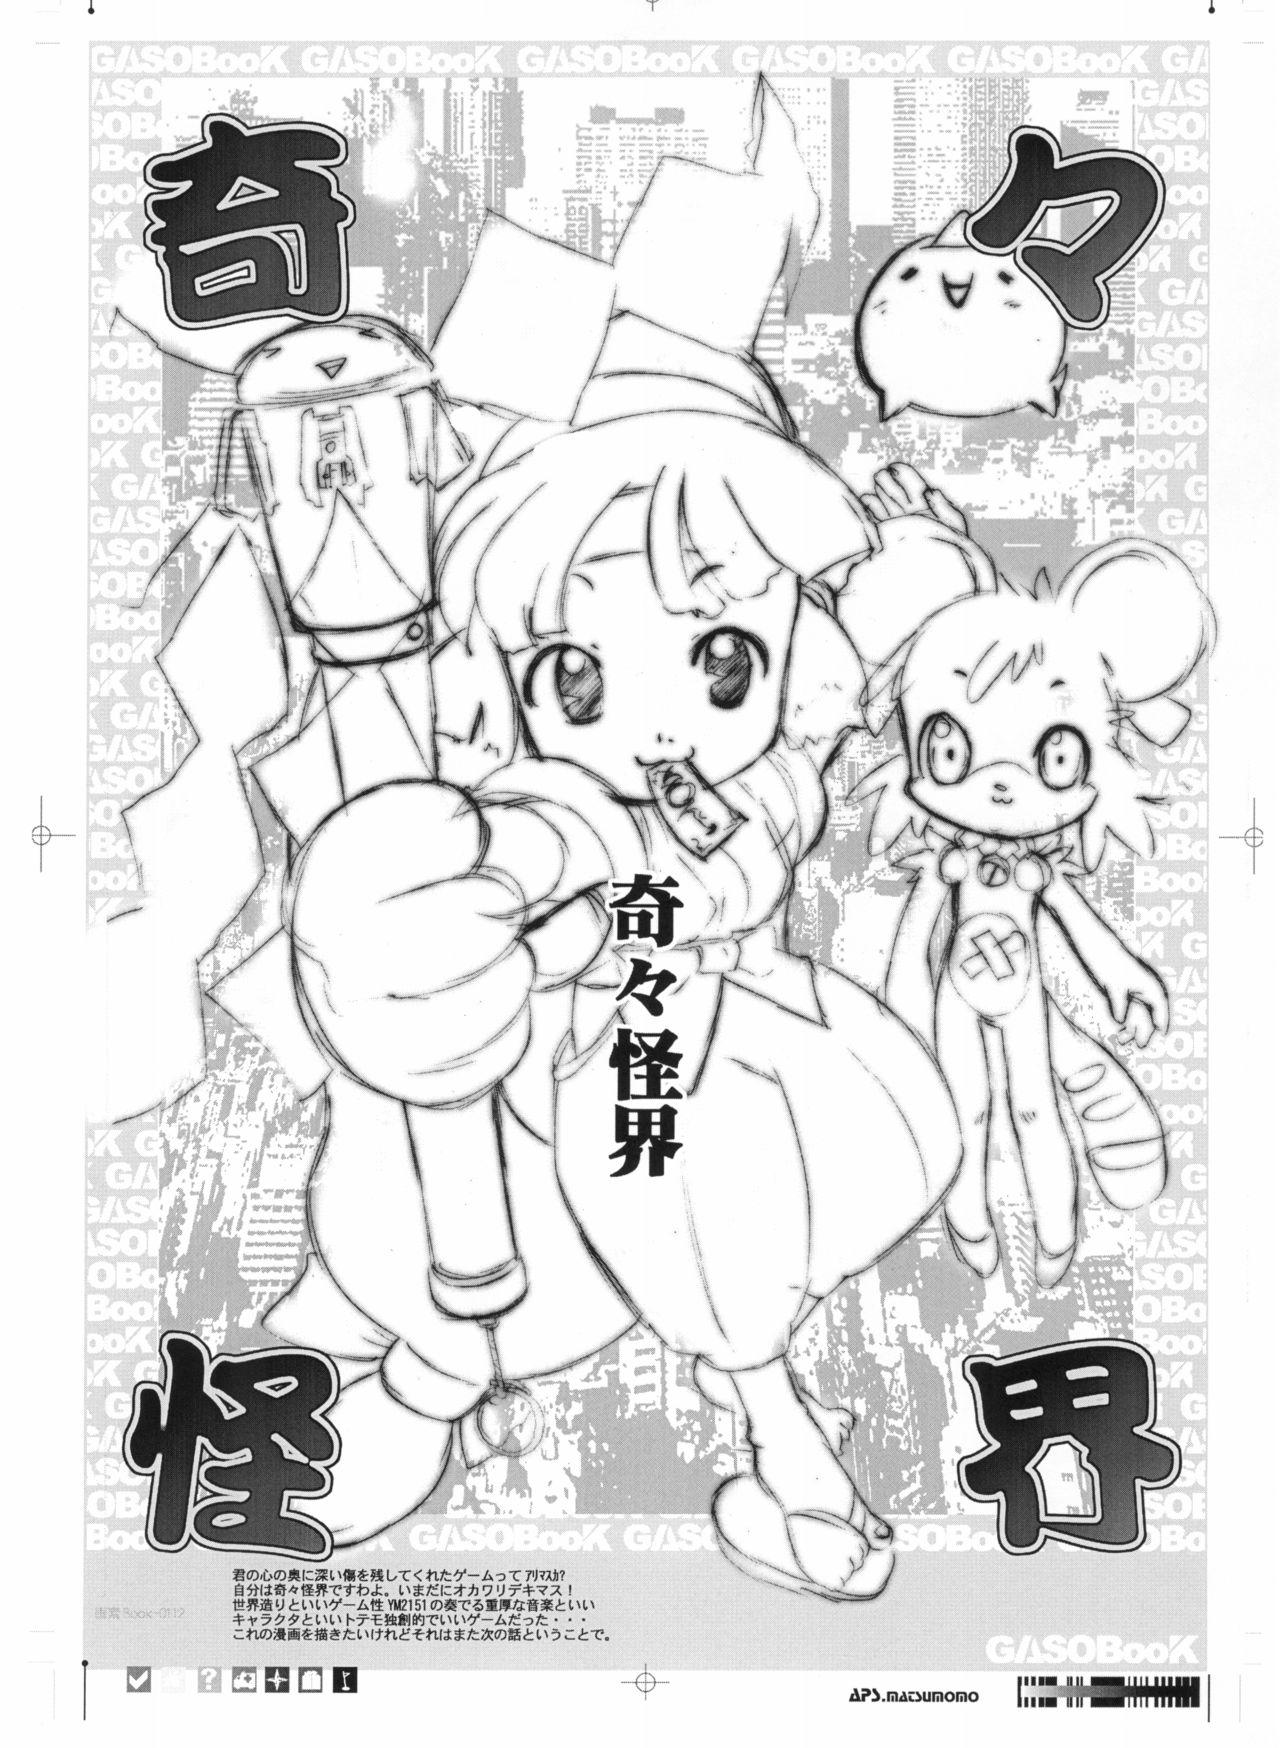 GASOBooK Genkou Youshi Kidz AnimeTronica -0112 25